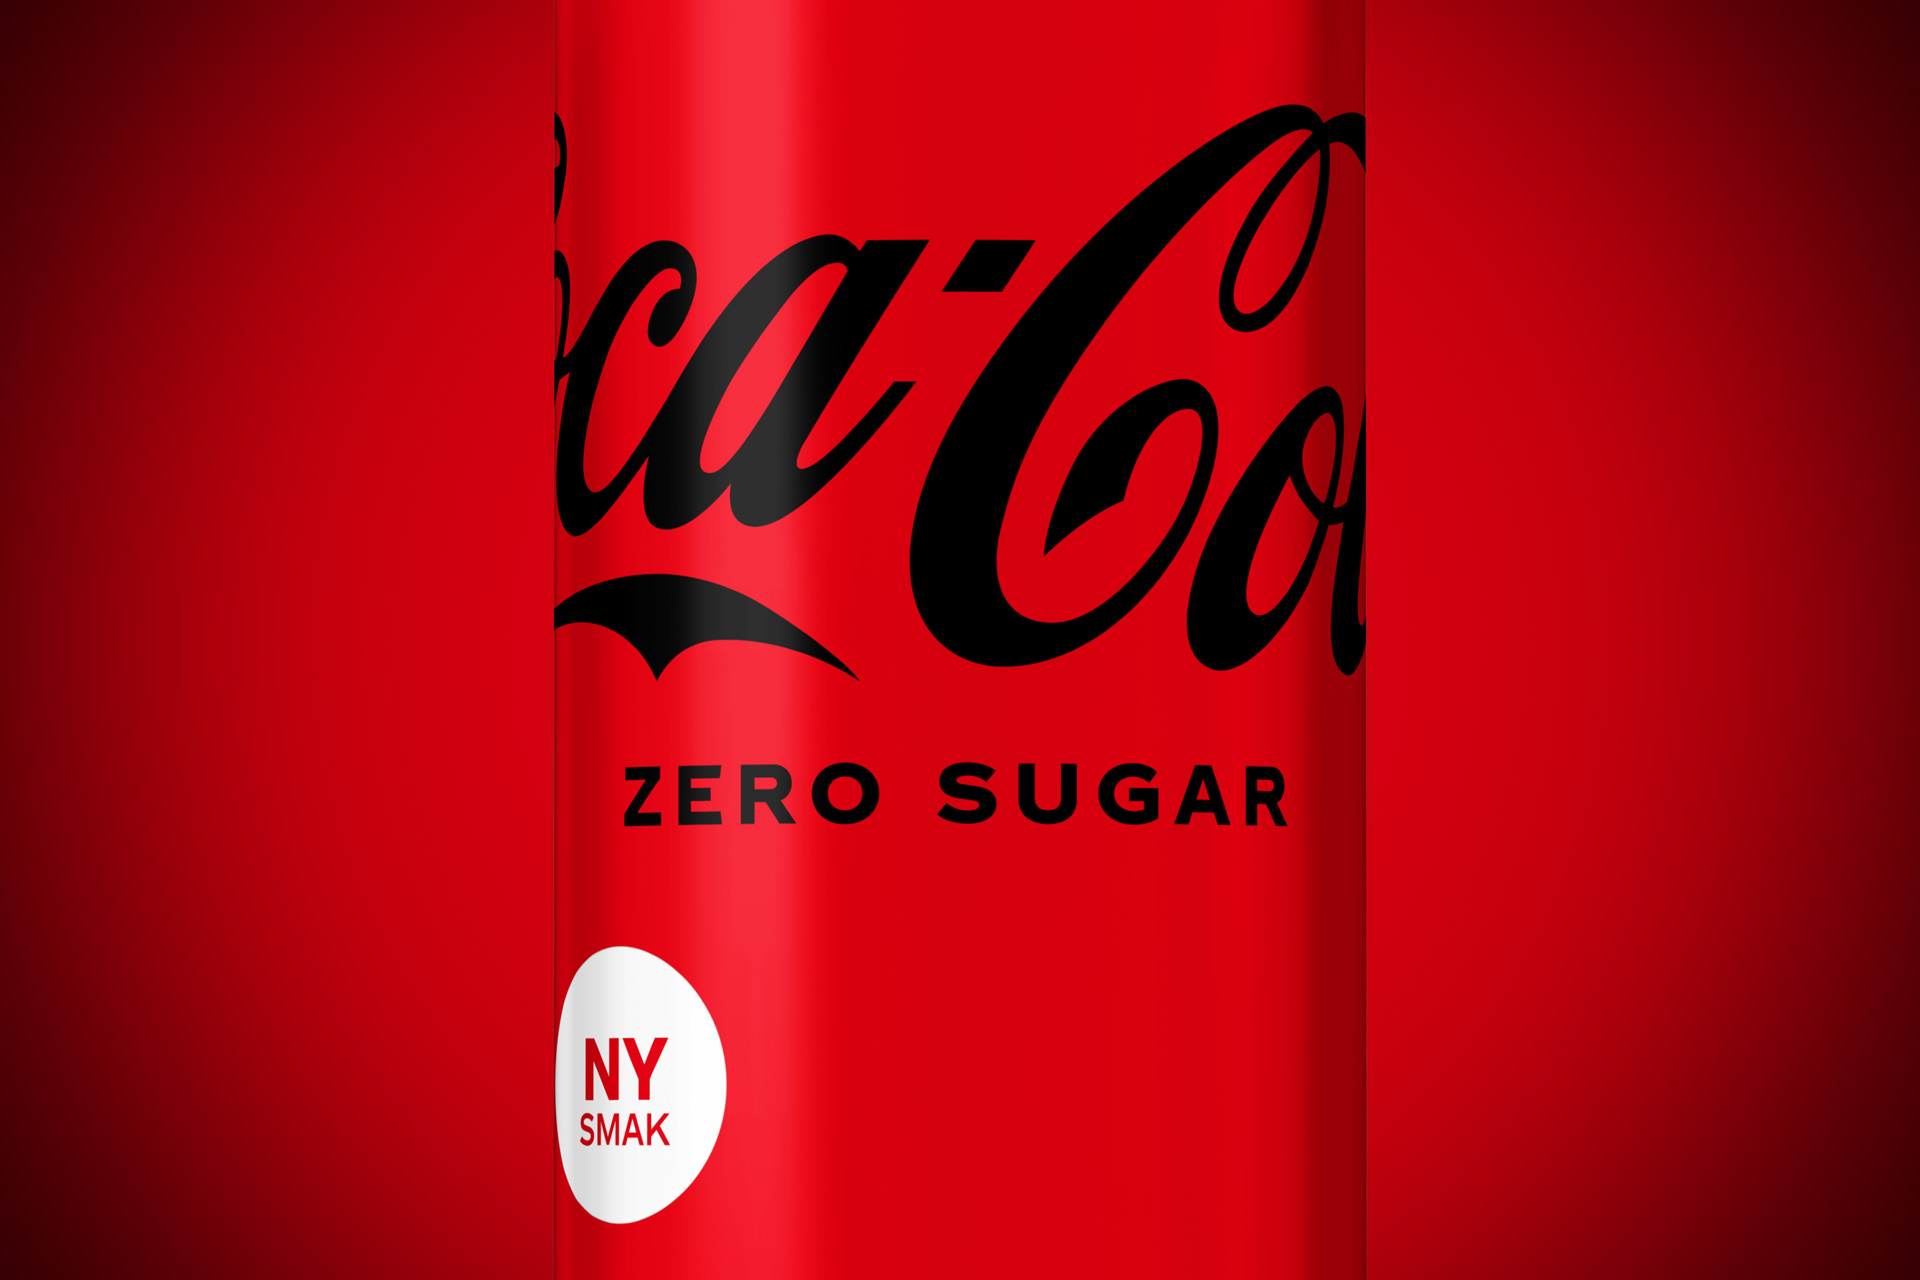 Olika åsikter om nya Coca-Cola Zero